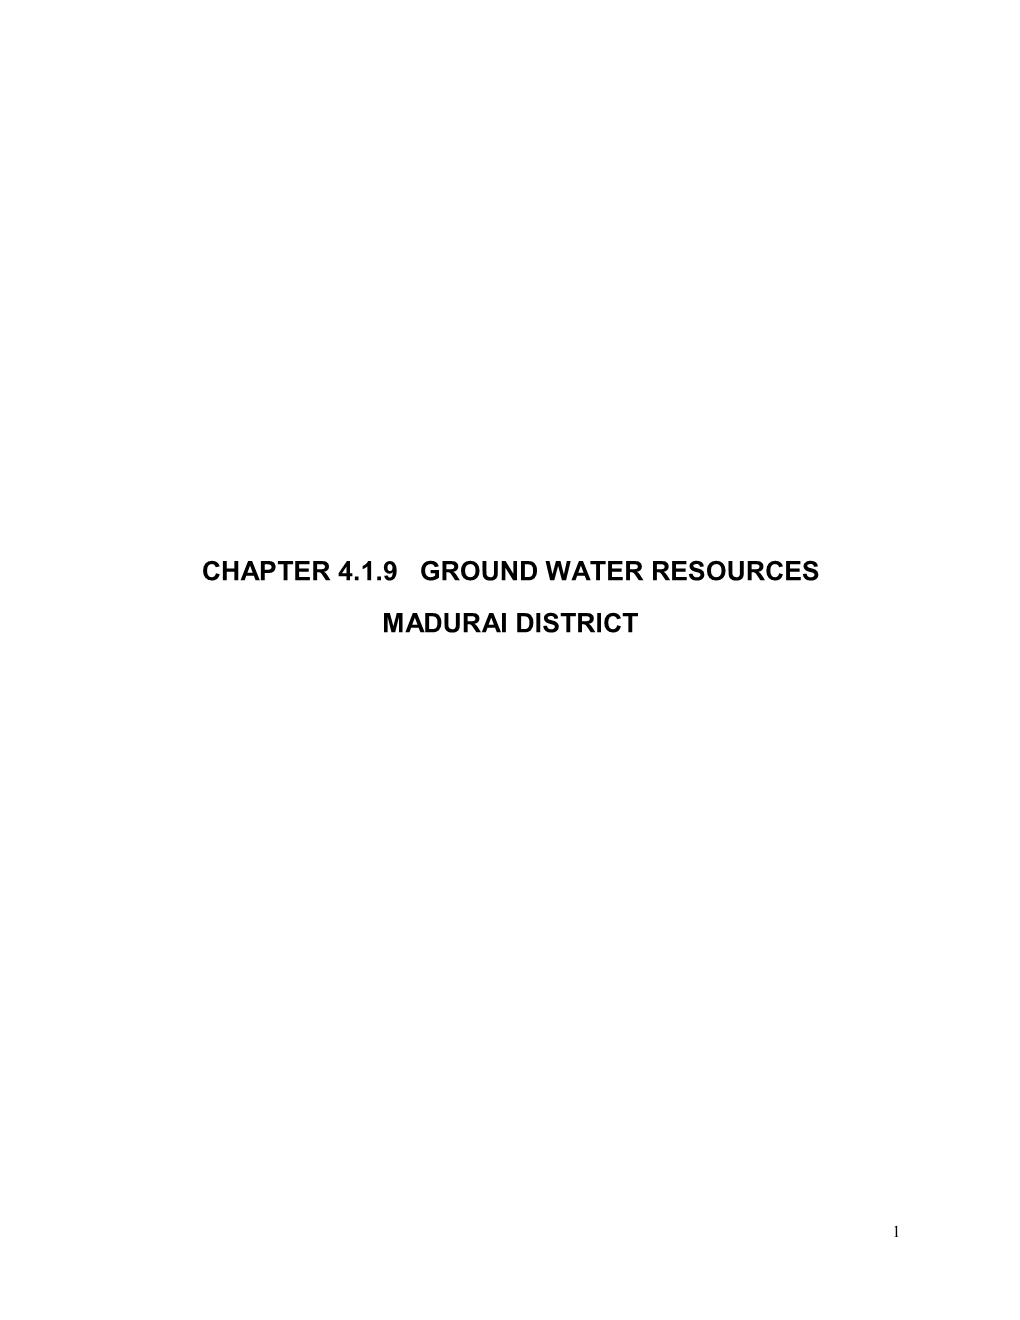 Chapter 4.1.9 Ground Water Resources Madurai District